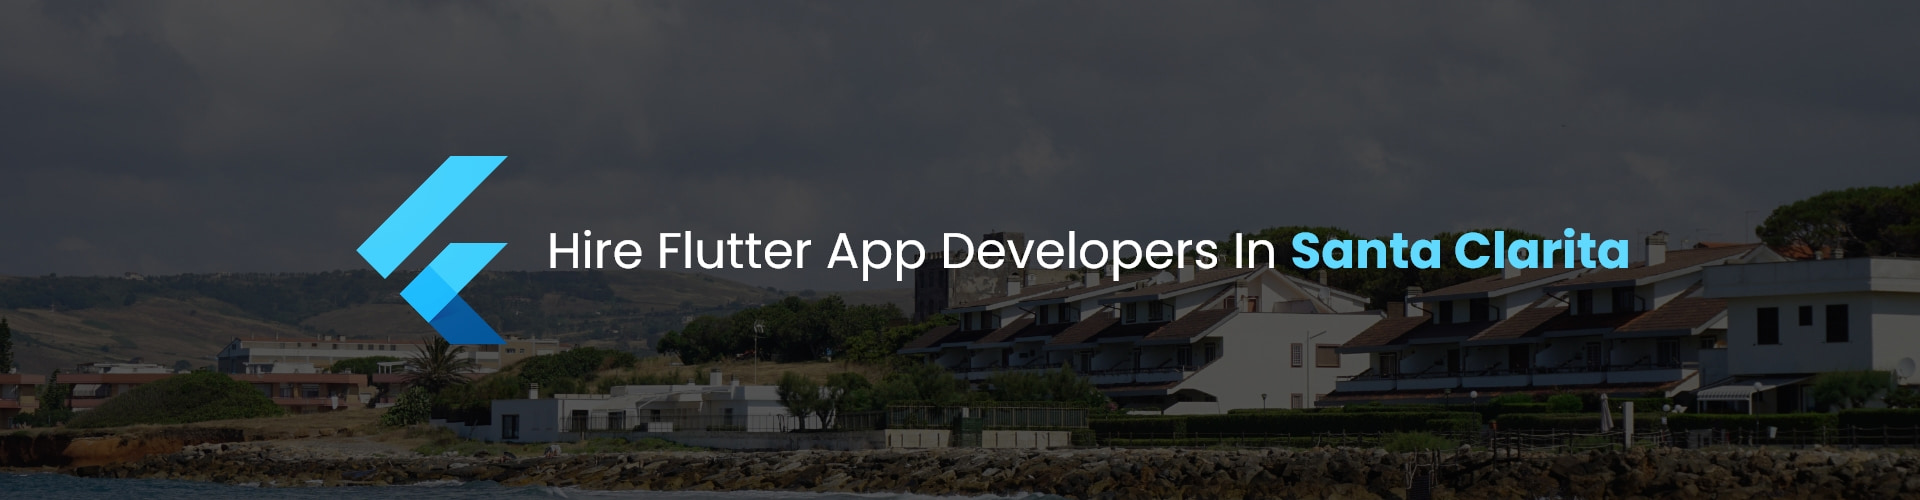 flutter app developers in santa clarita